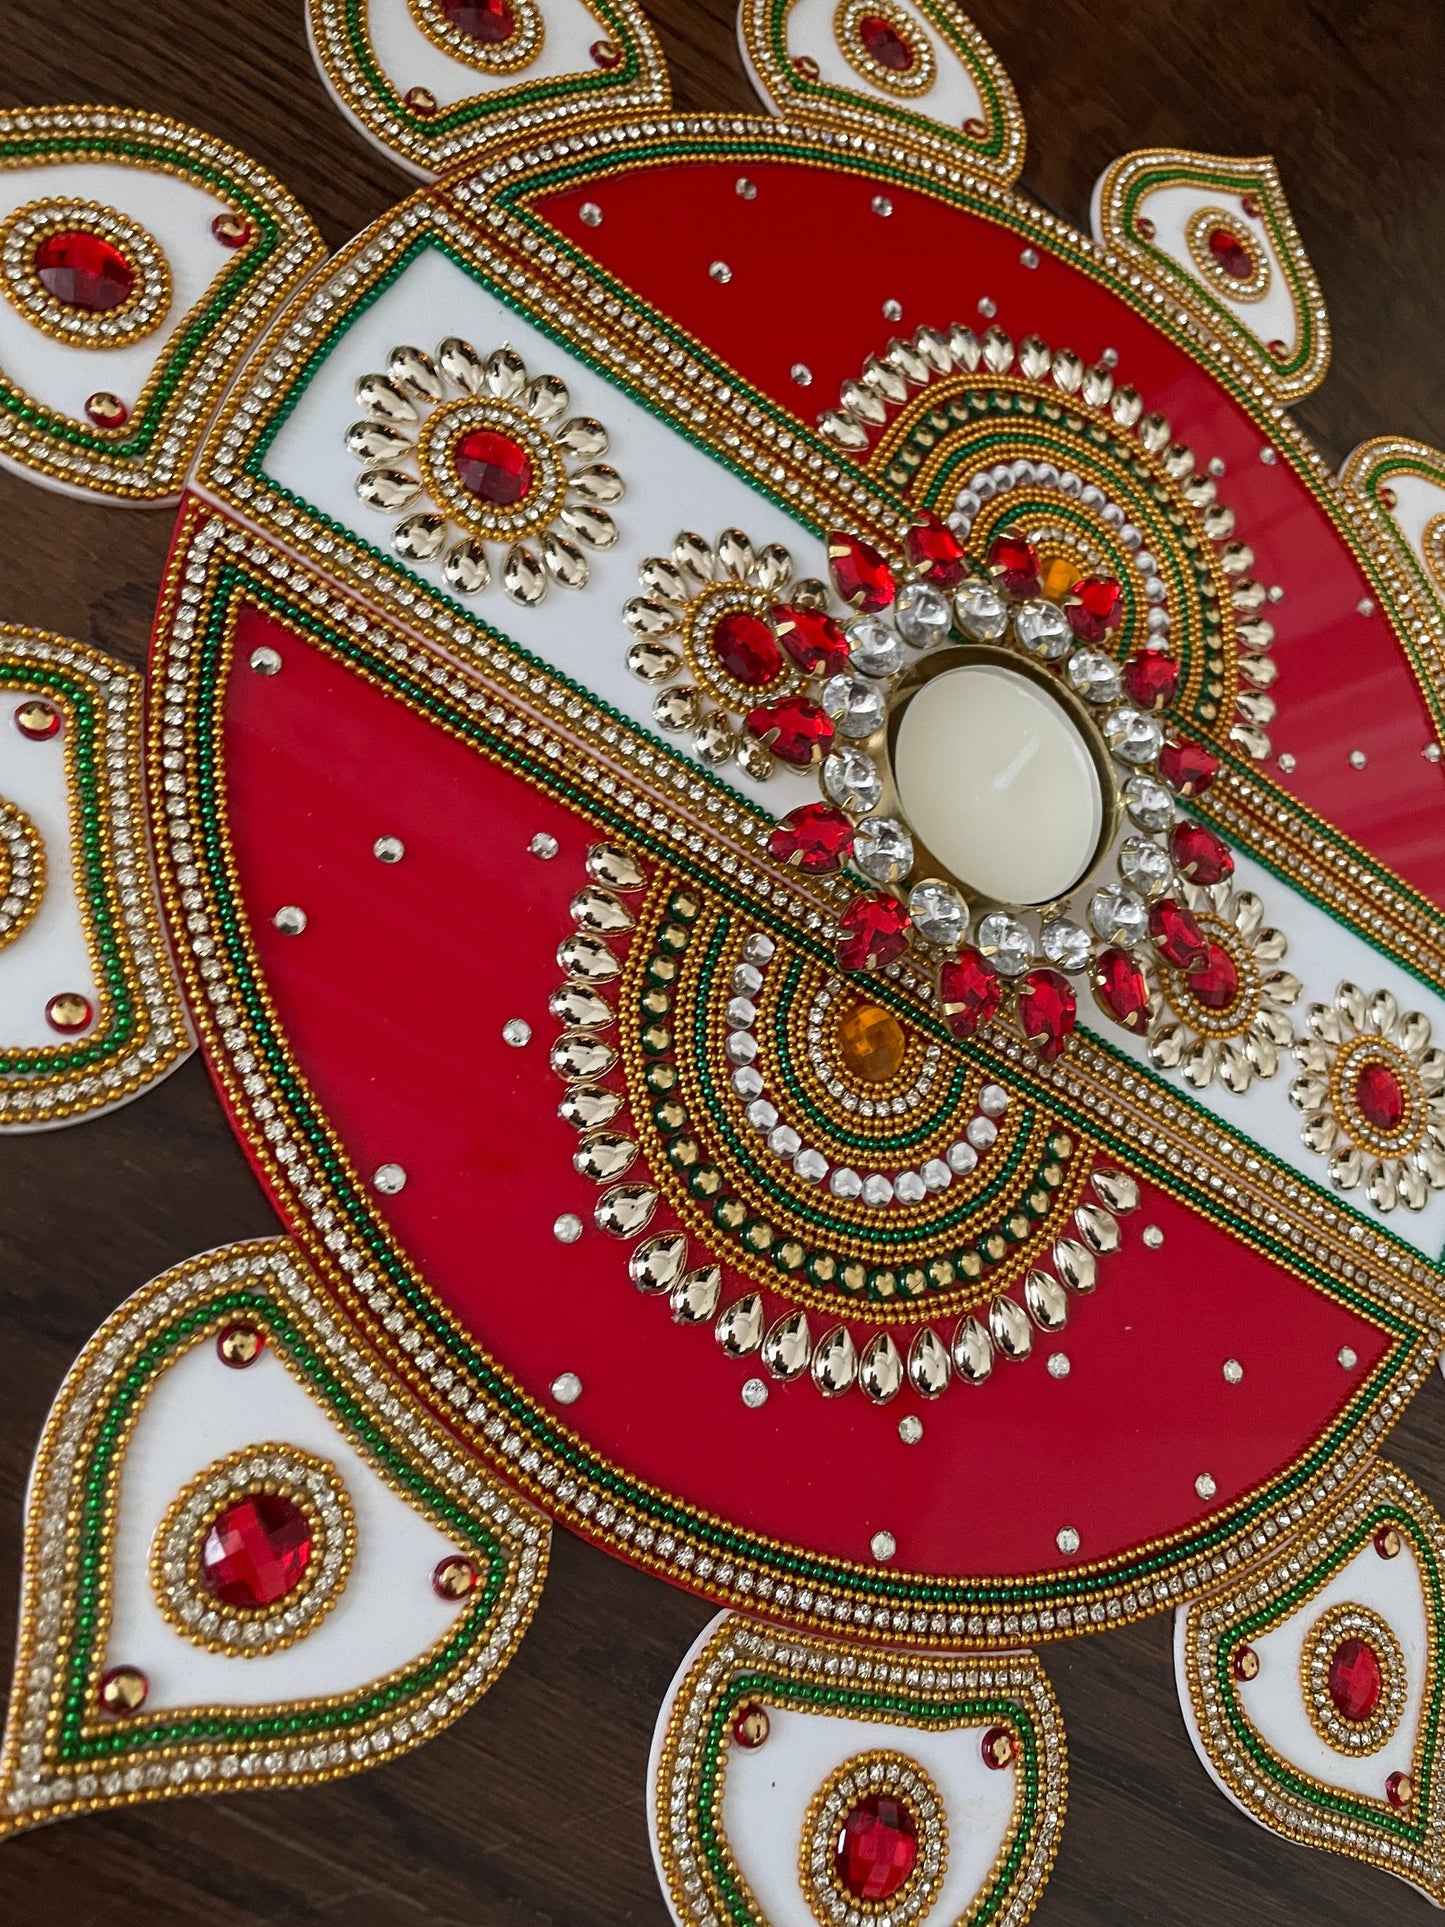 Large Rangoli Floor Art Weddings New Home Navratri Durga Pooja Flower Design comes with Diya Mandala Alpona